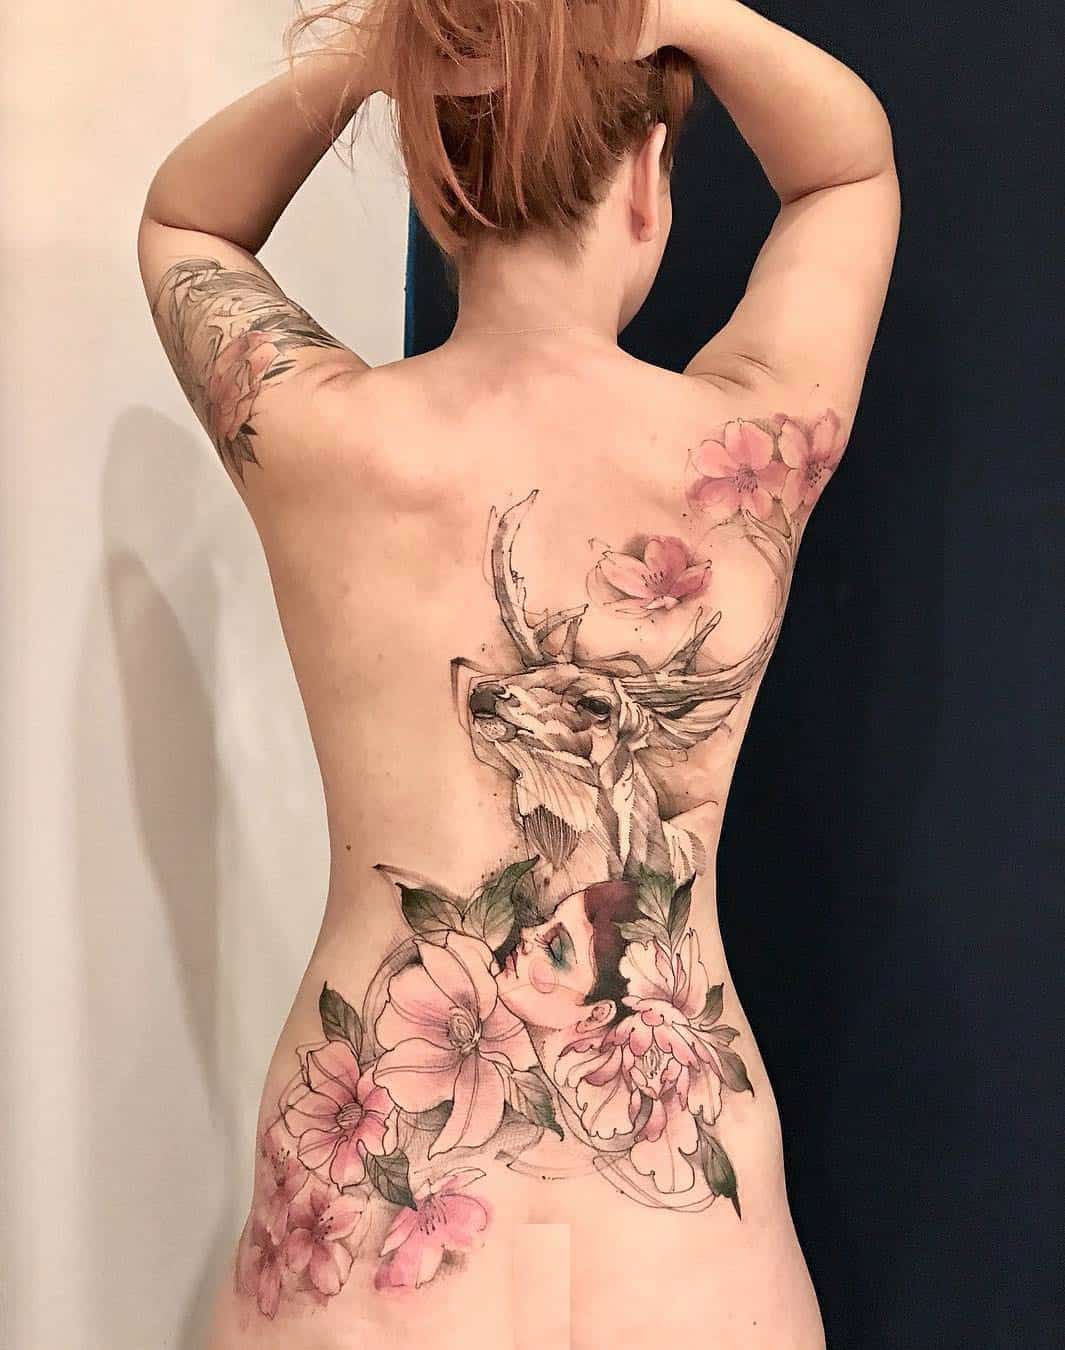 A floral scene tattoo